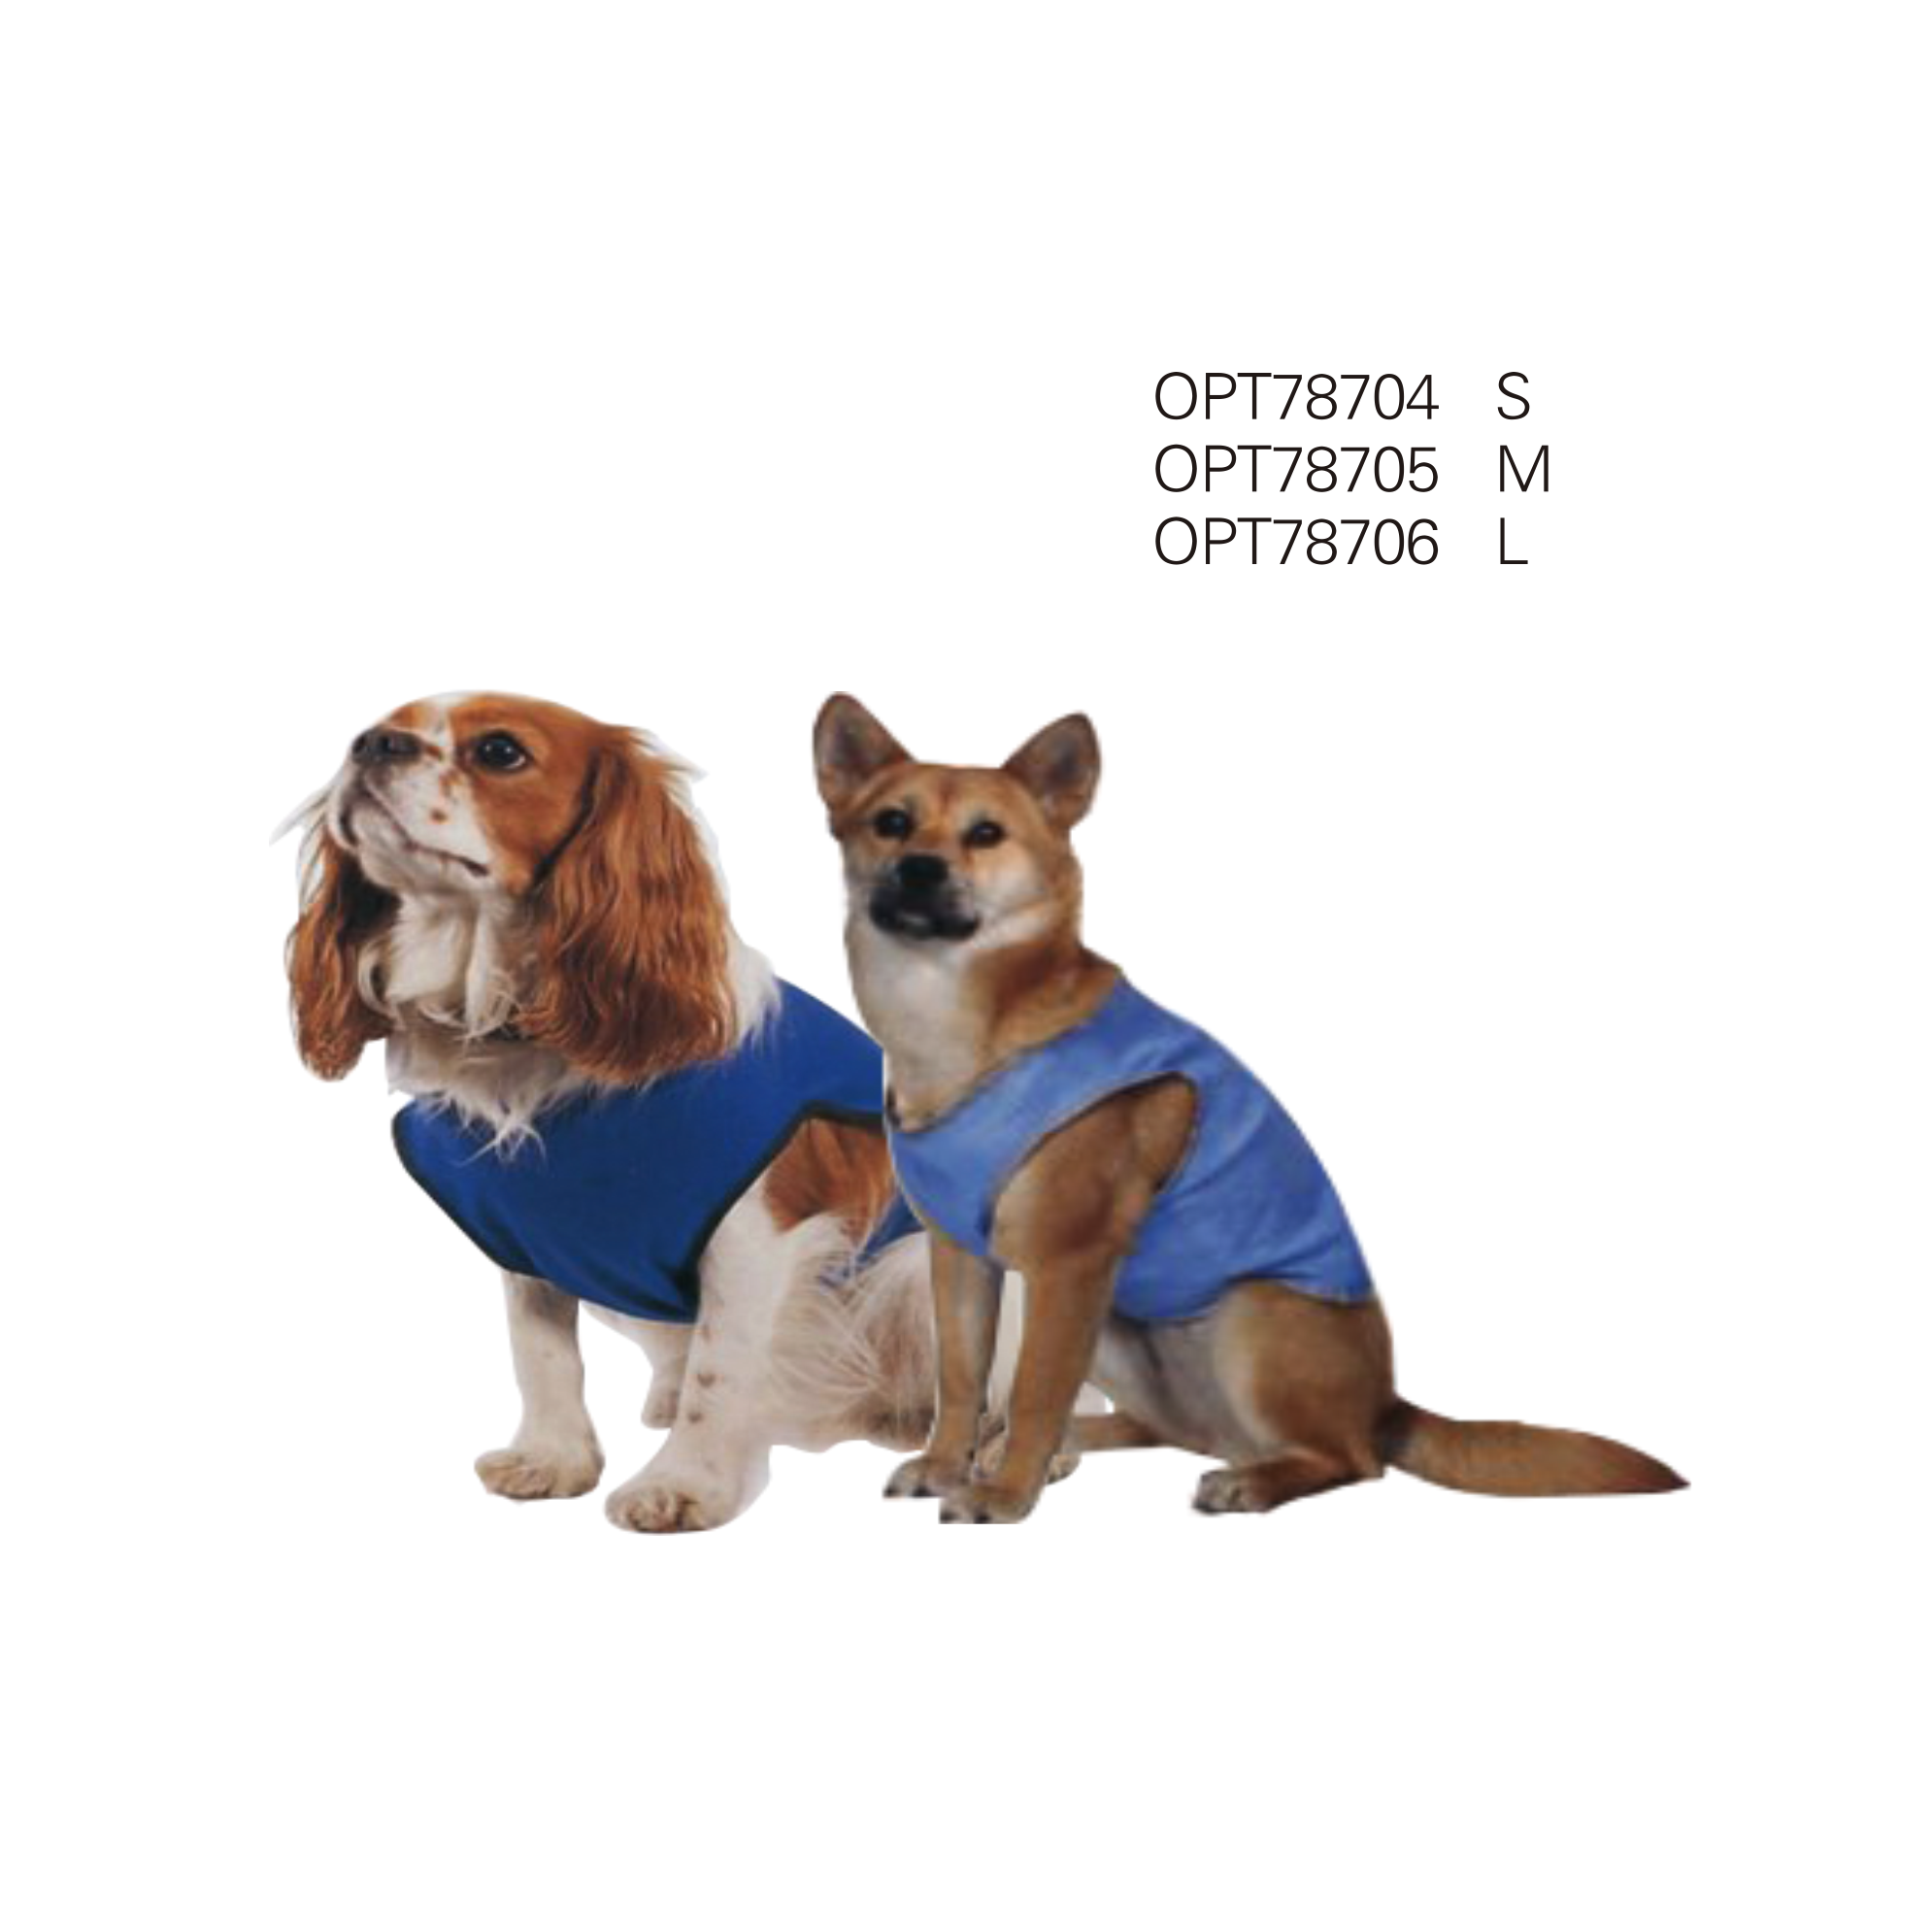 OPT78704-OPT78706 Cooling bandanas,collars,vests